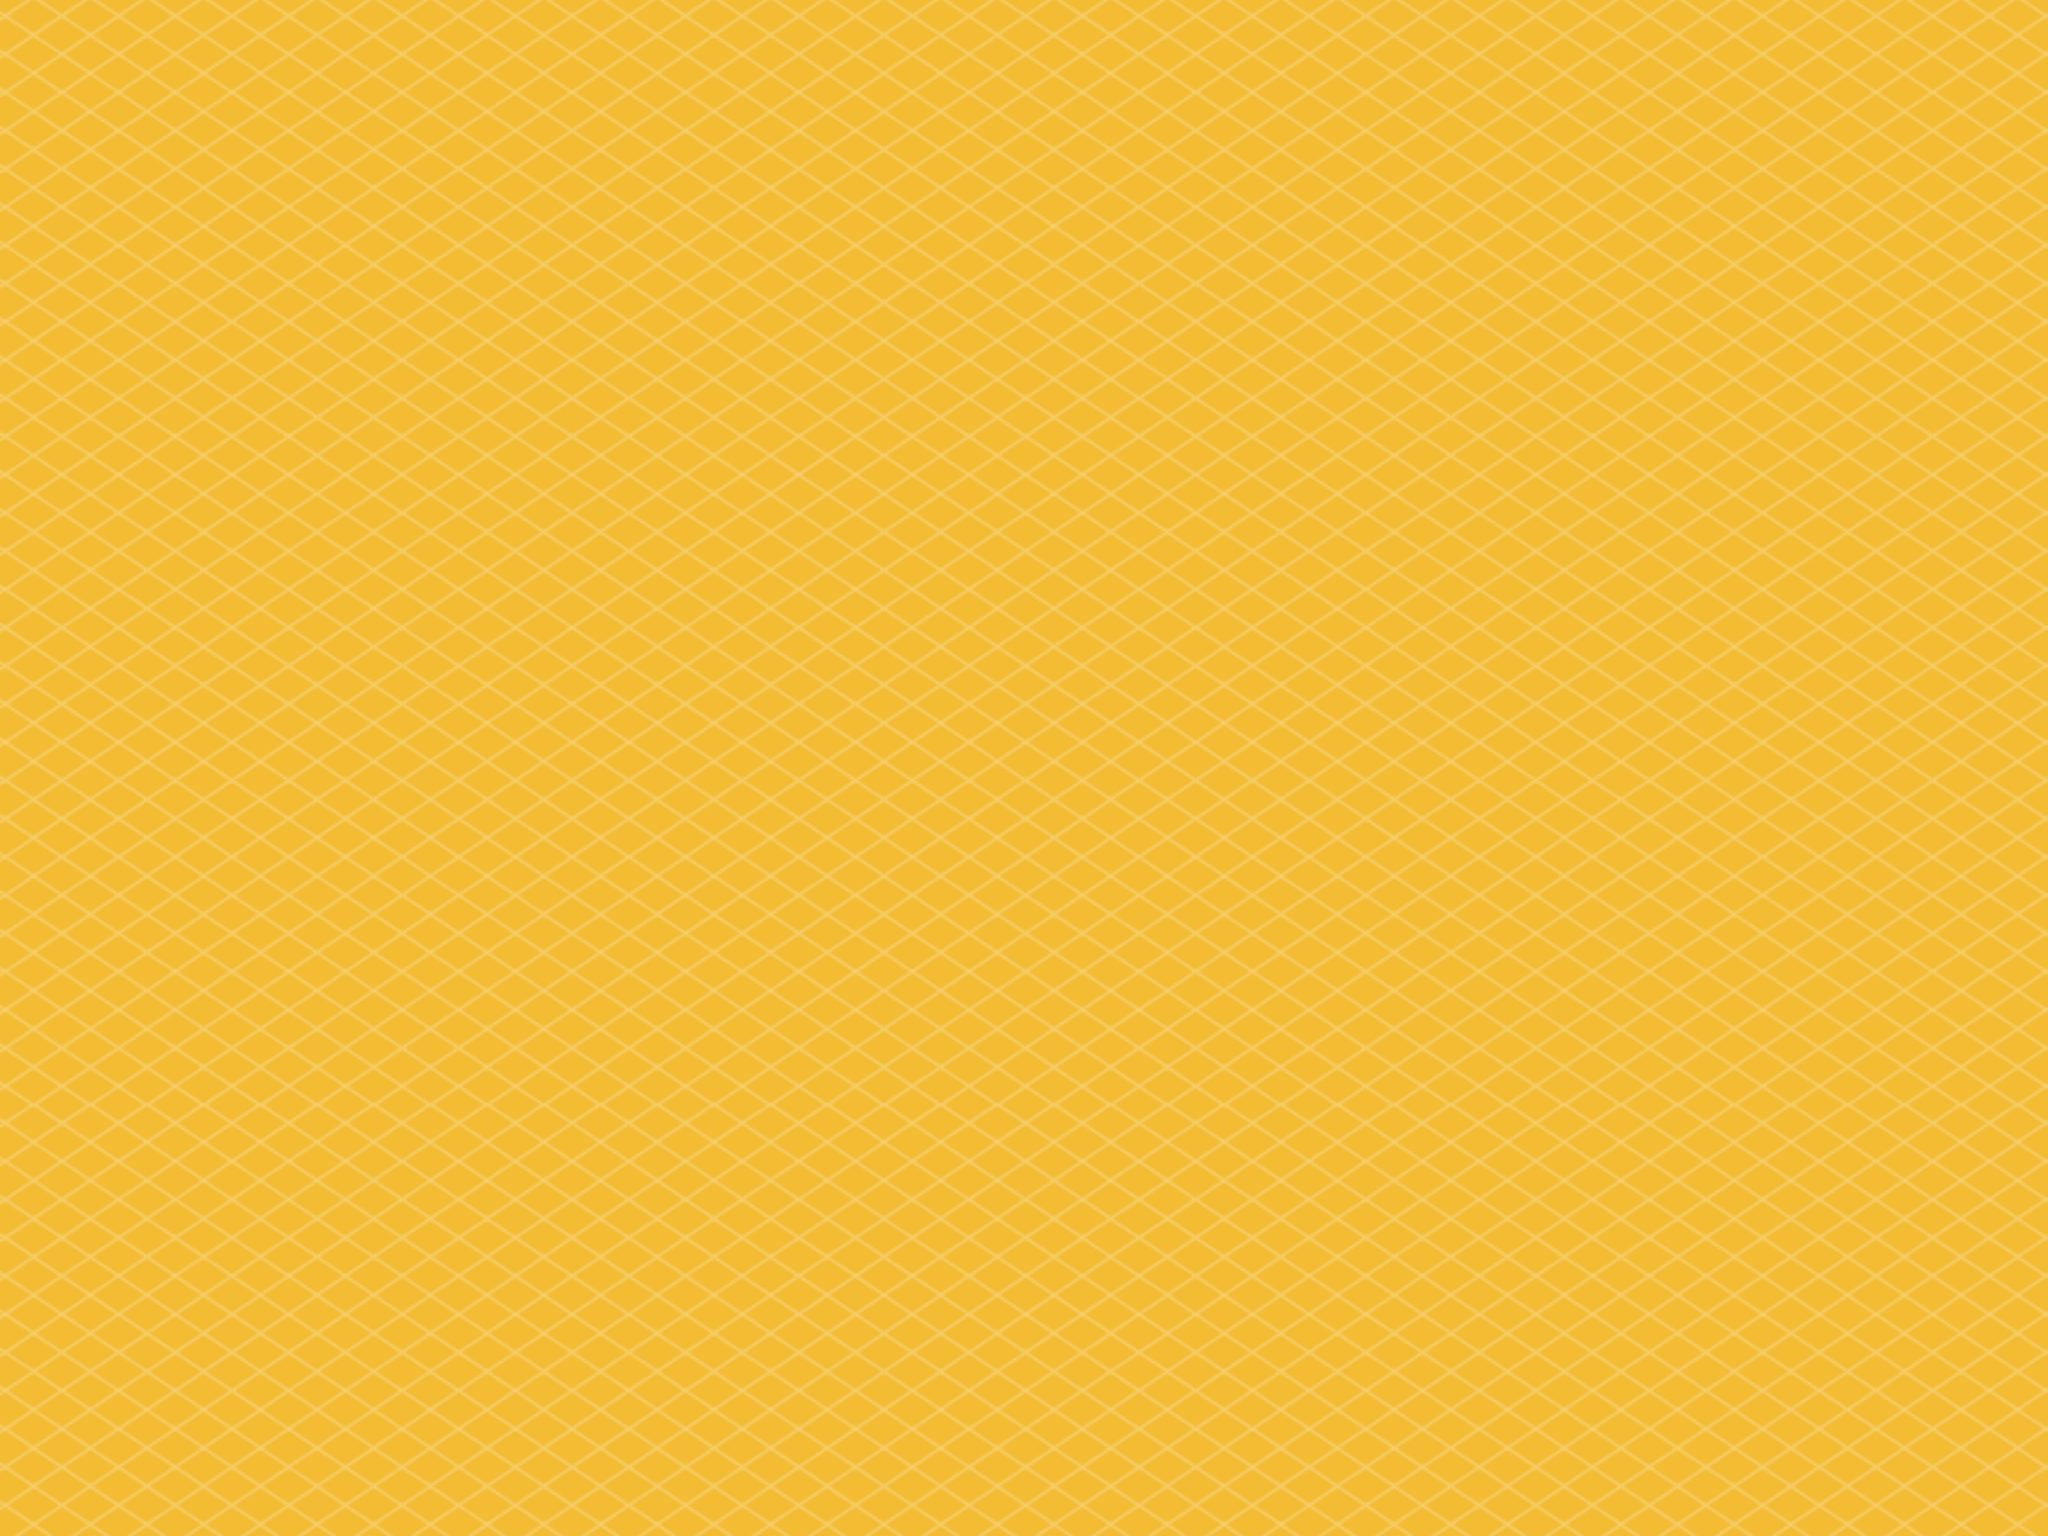 2048x1536 wallpaper Yellow iPad Wallpaper 2048x1536 pixels resolution